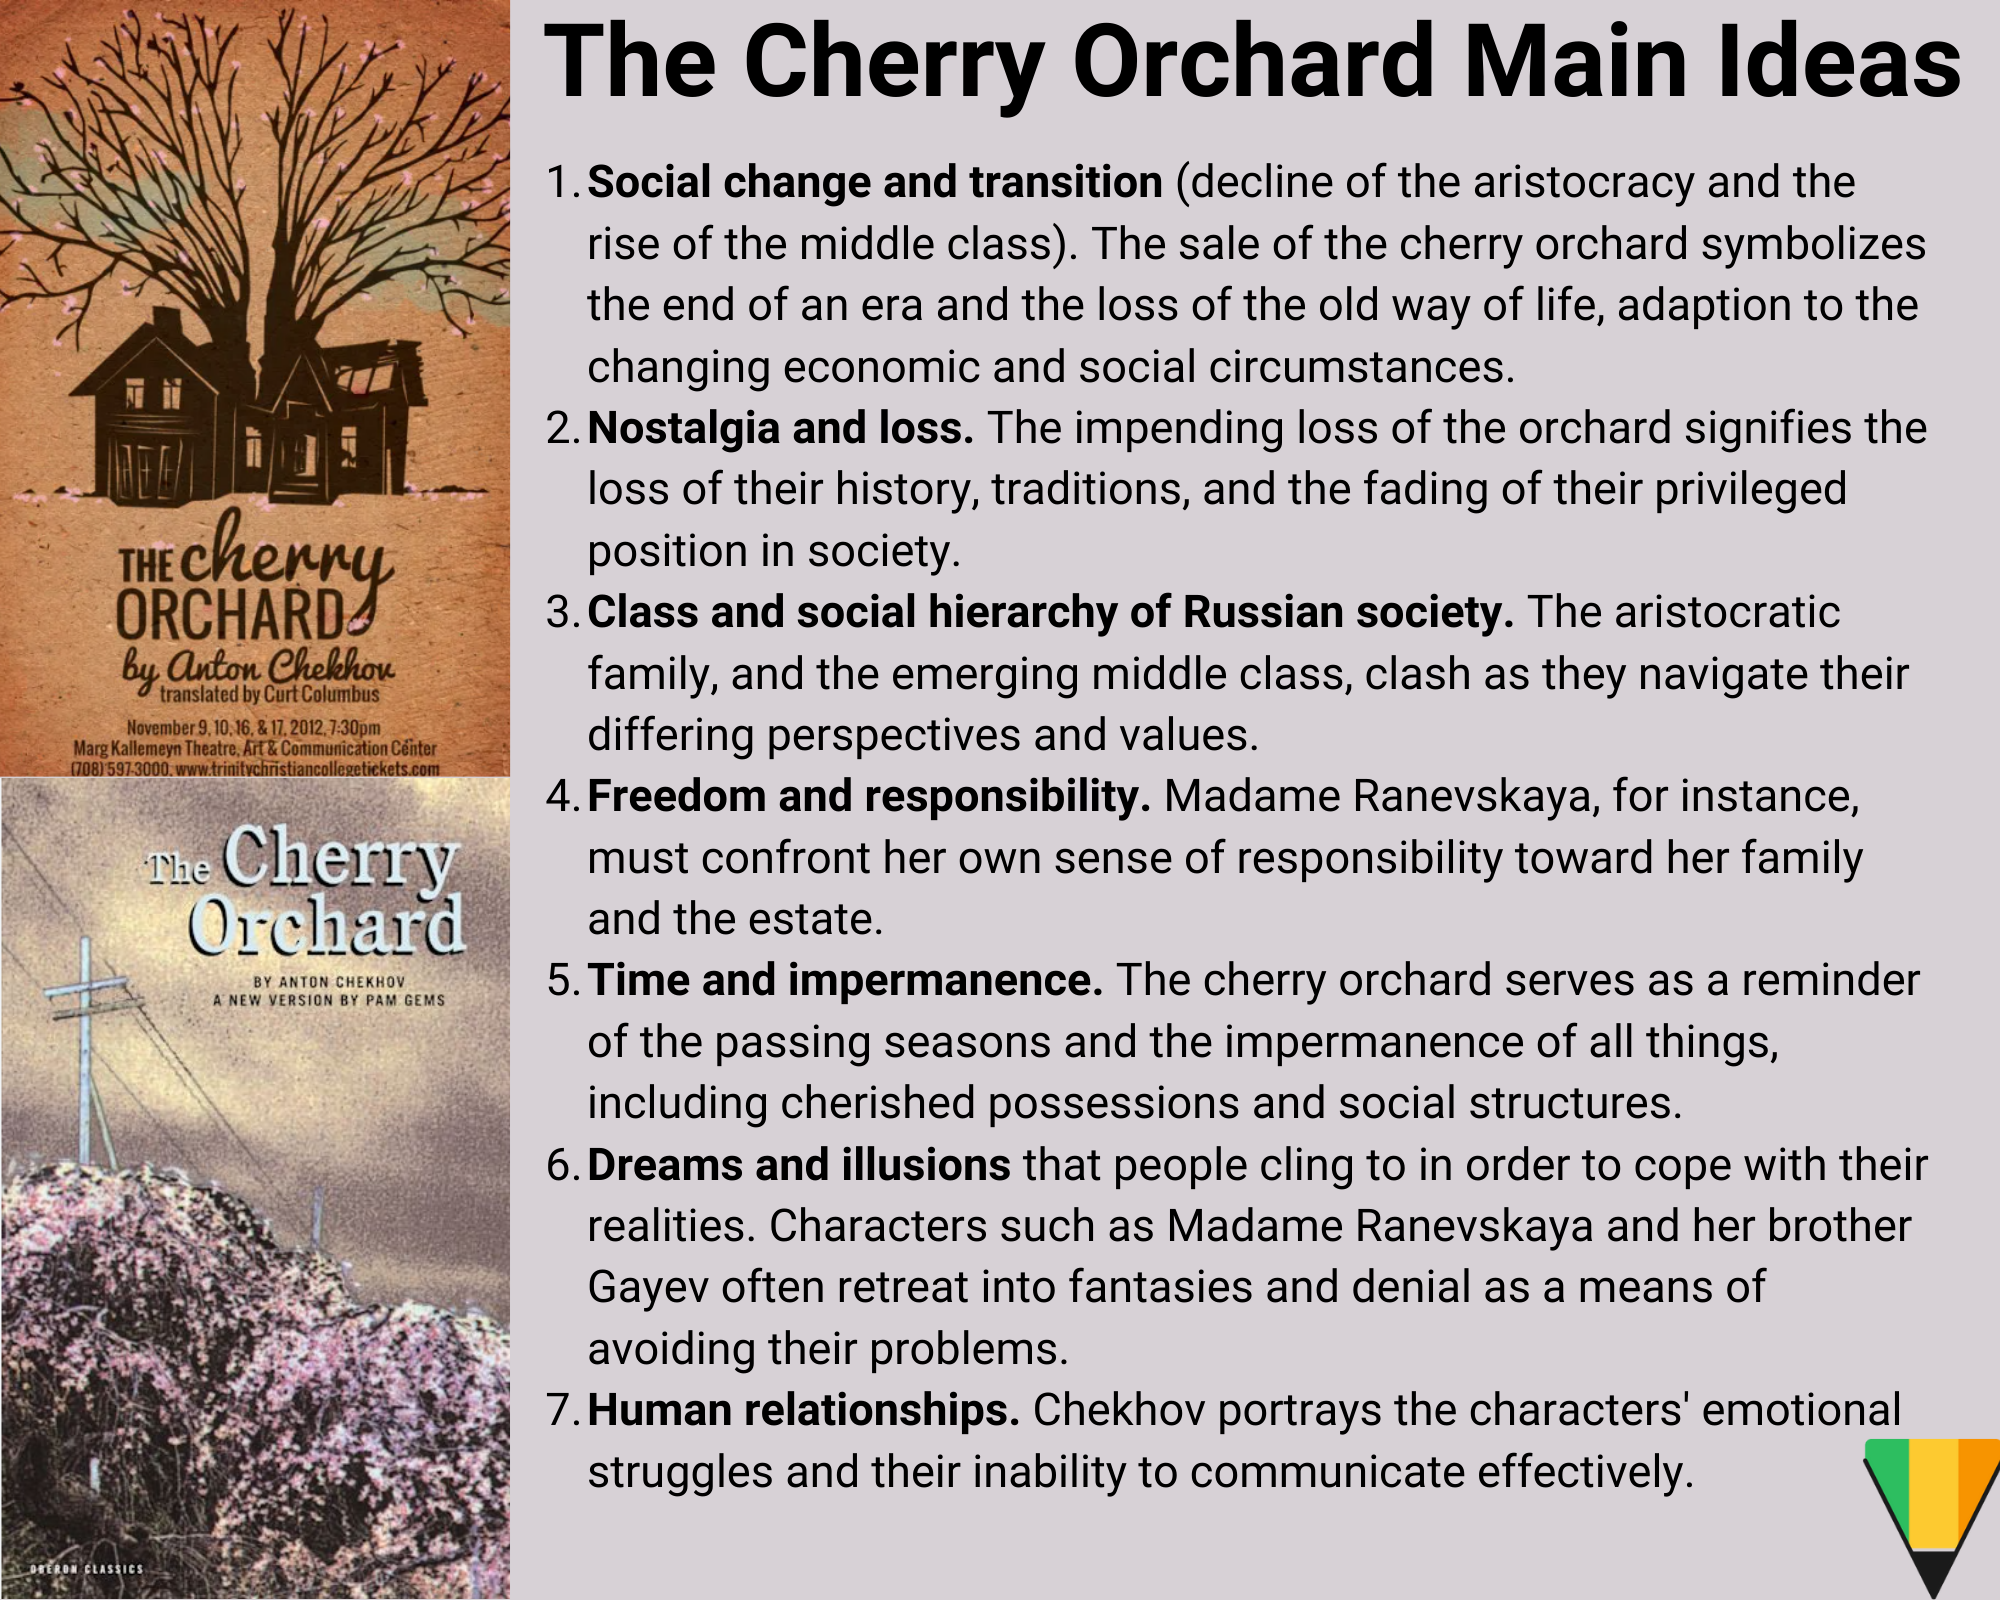 The Cherry Orchard Main Ideas